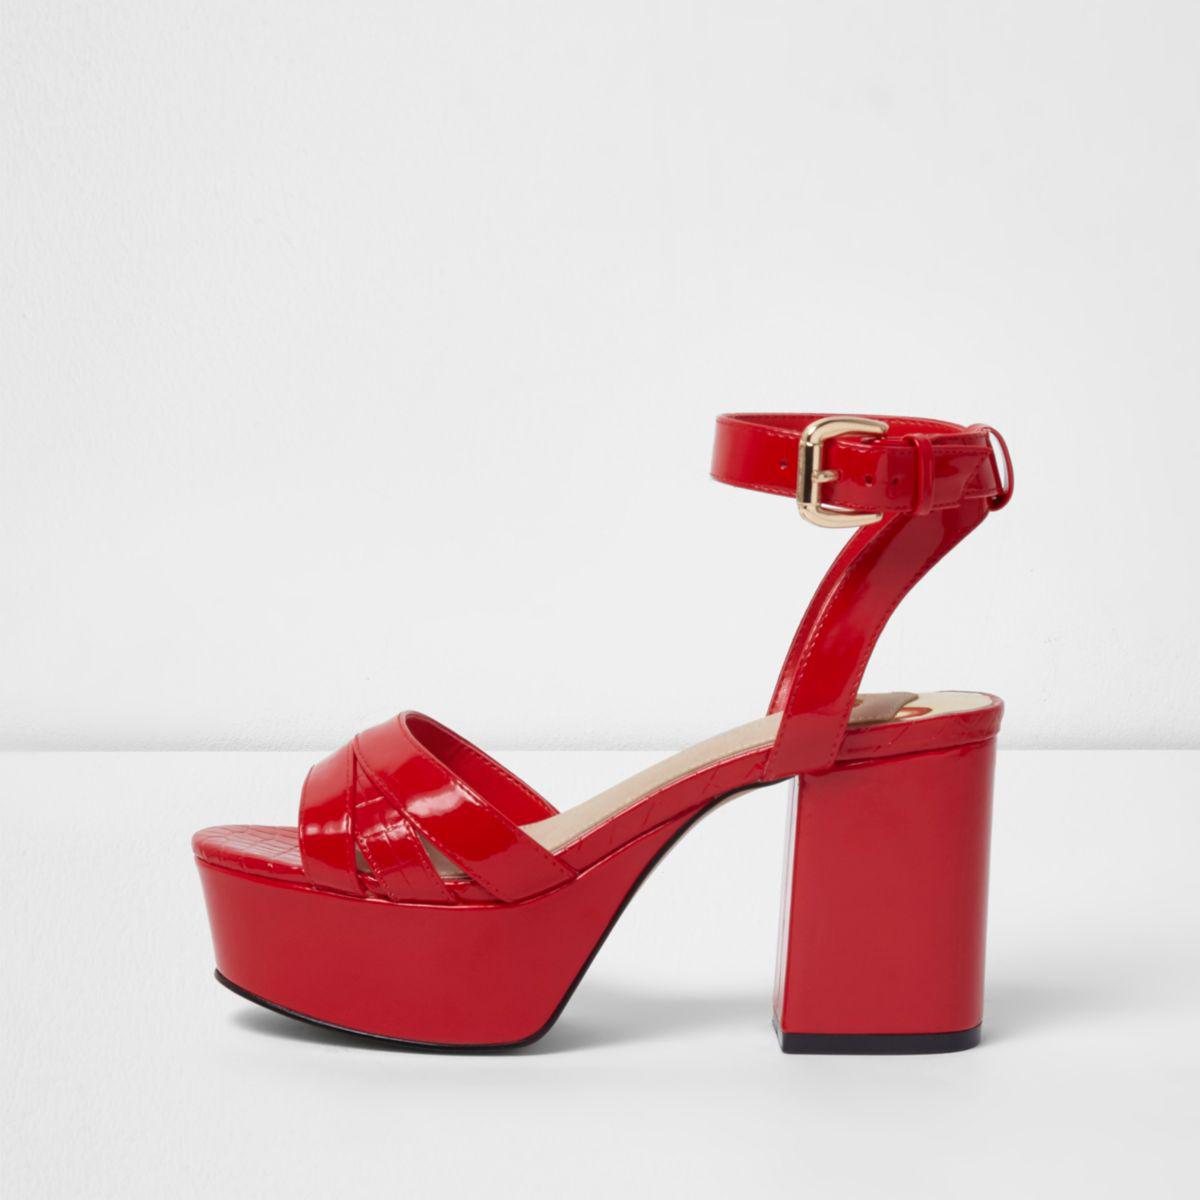 Lyst - River Island Red Patent Platform Block Heel Sandals Red Patent ...